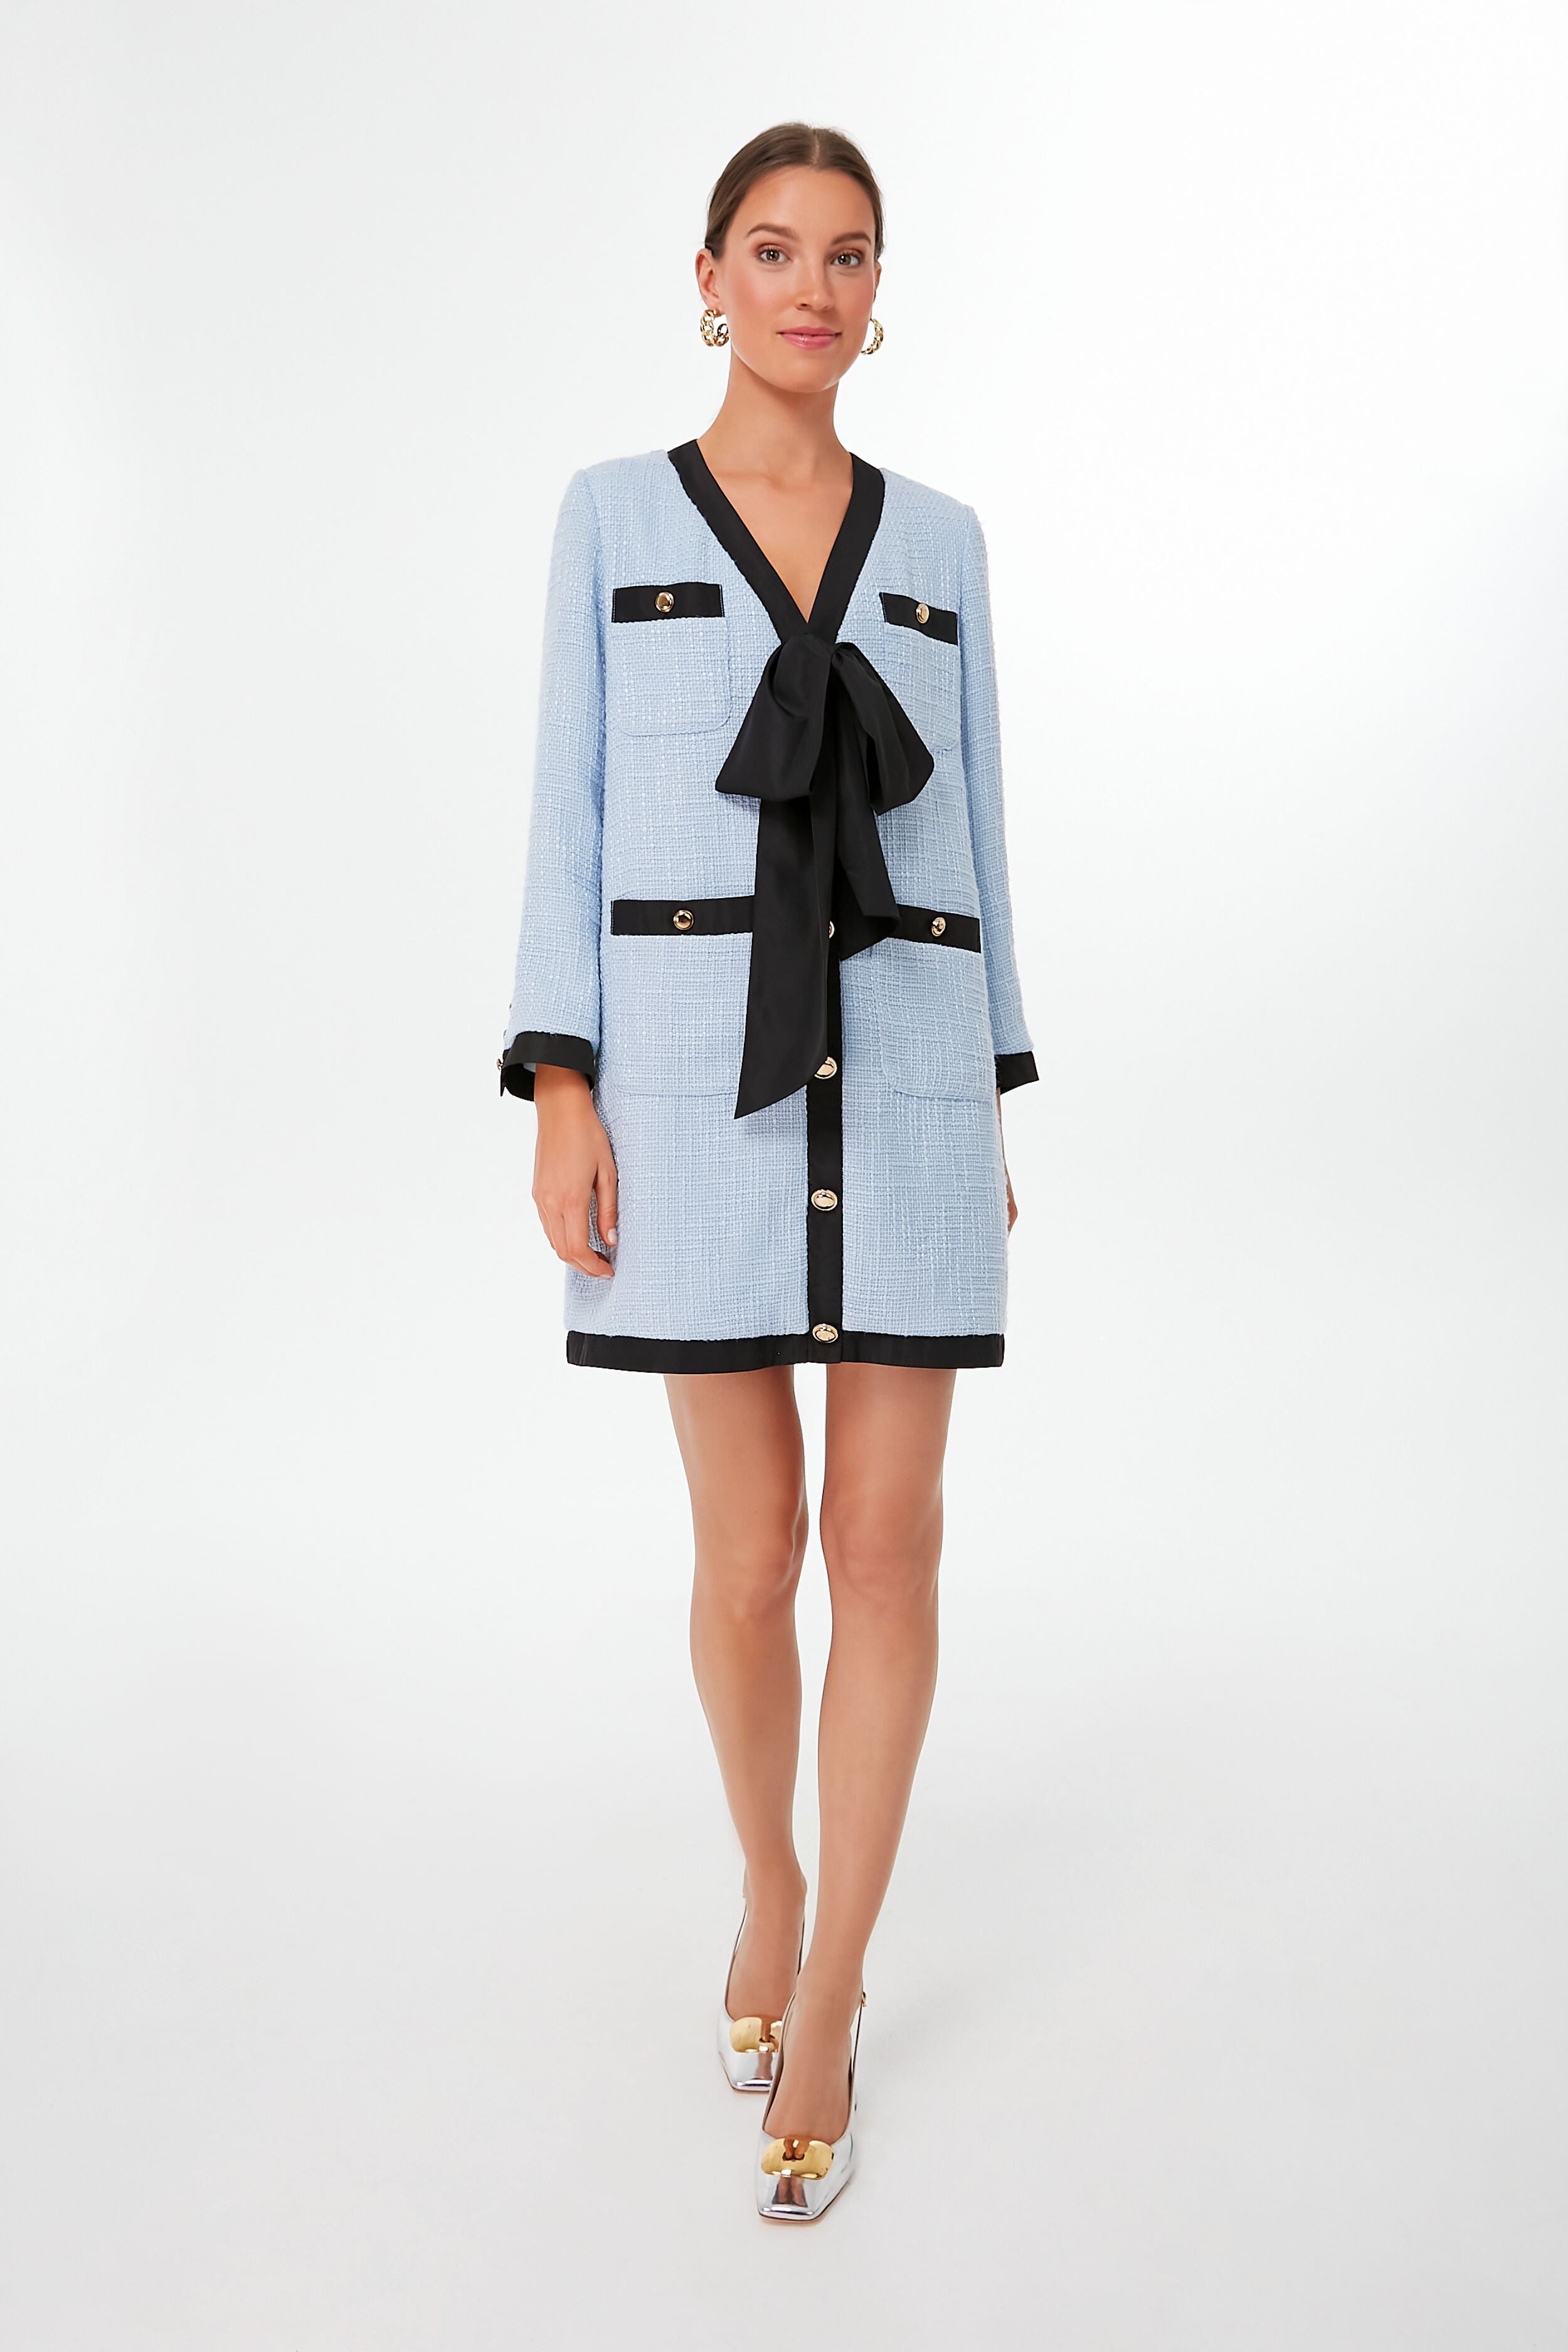 Chanel Tweed Dress – Royal Bleau Boutique Atl